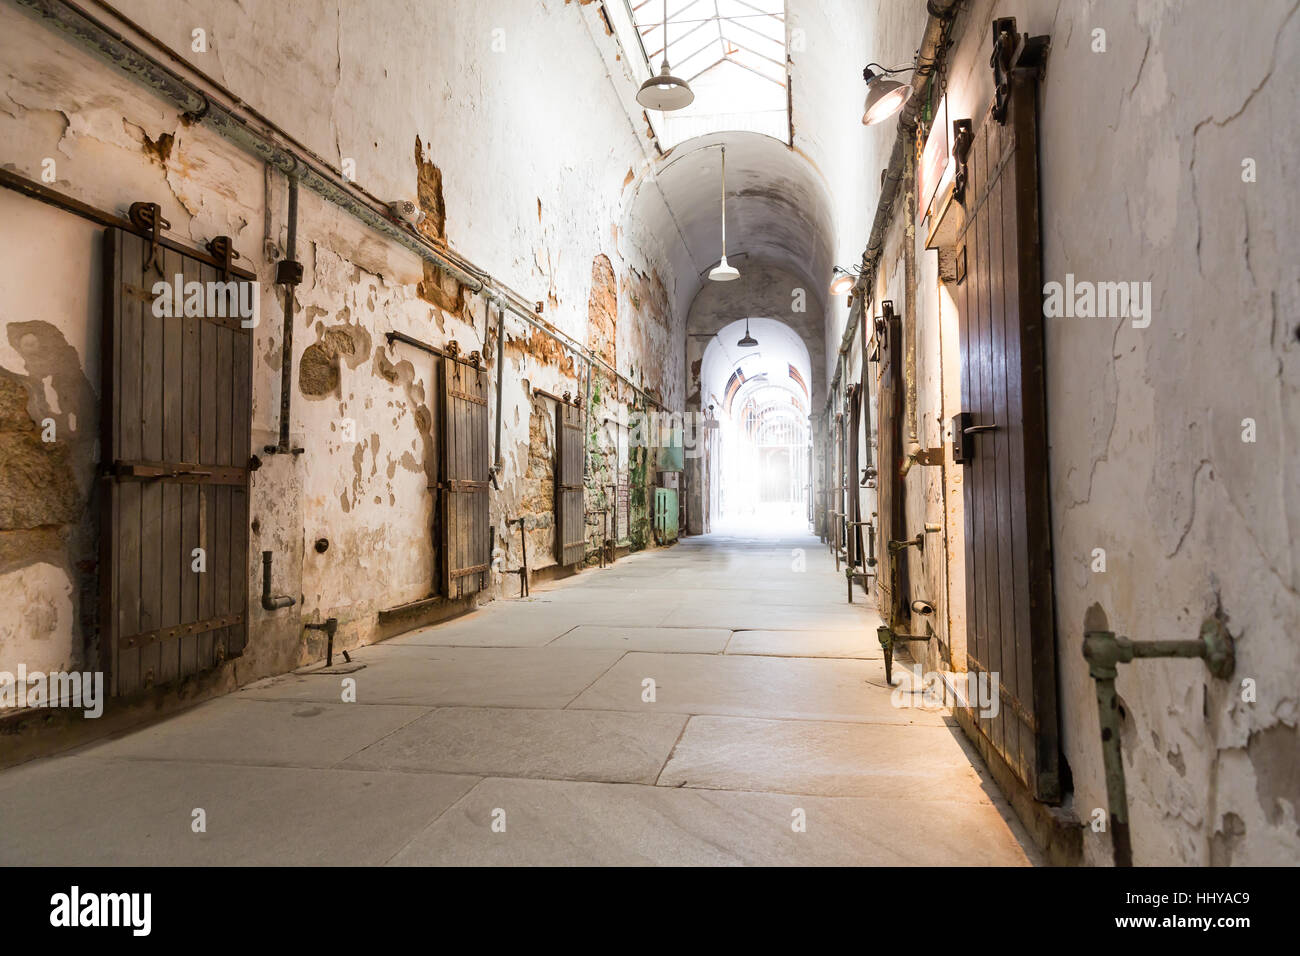 Jail hallway with locked doors. Stock Photo